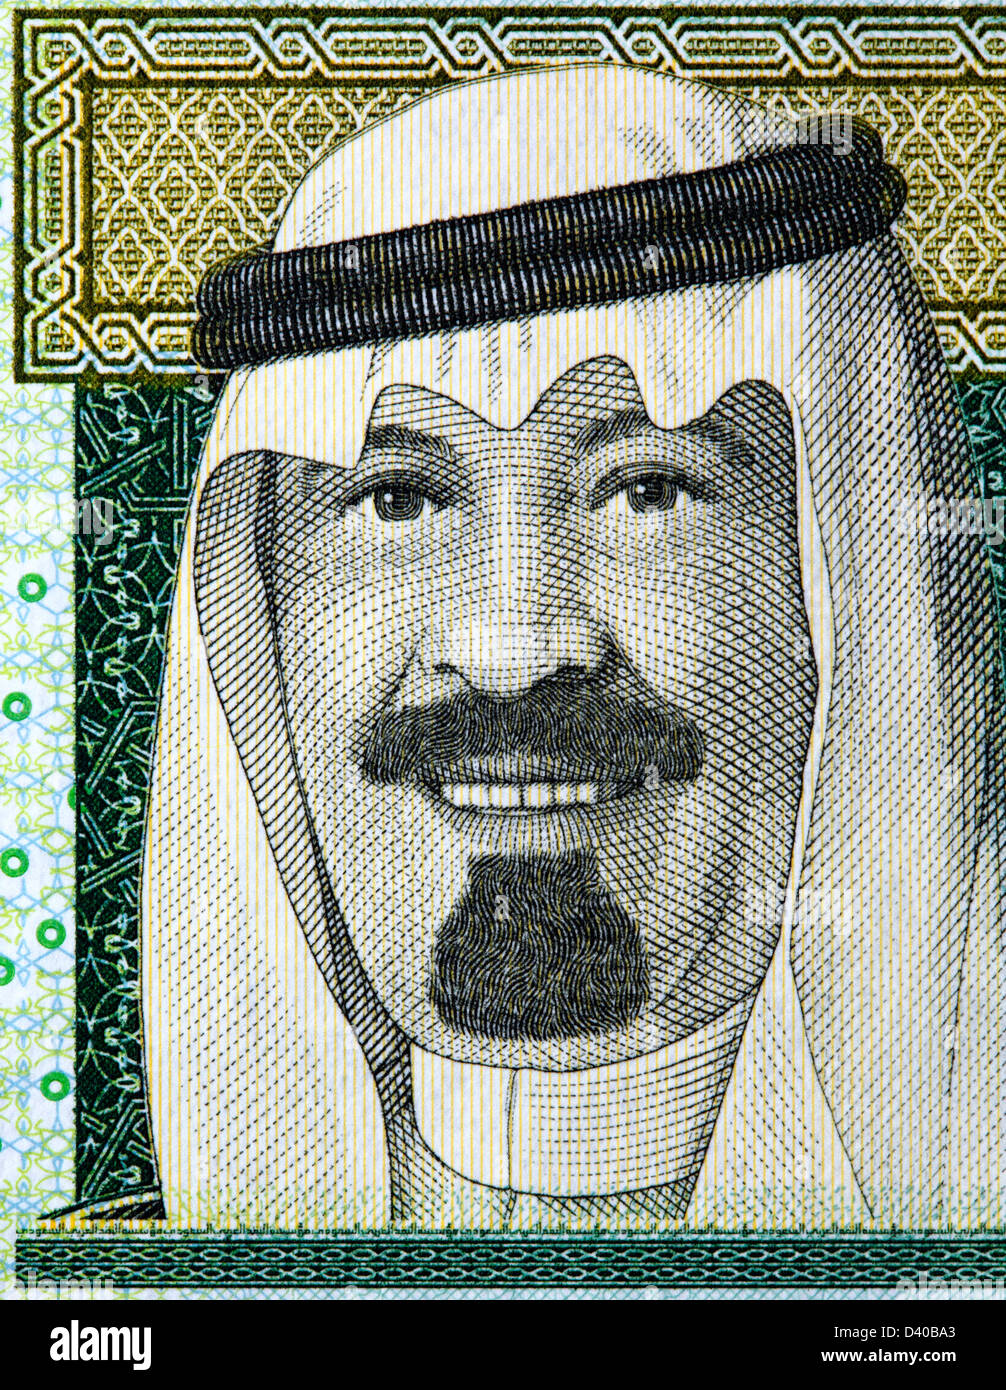 Portrait of King Abdullah from 1 Rial banknote, Saudi Arabia, 2007 Stock Photo